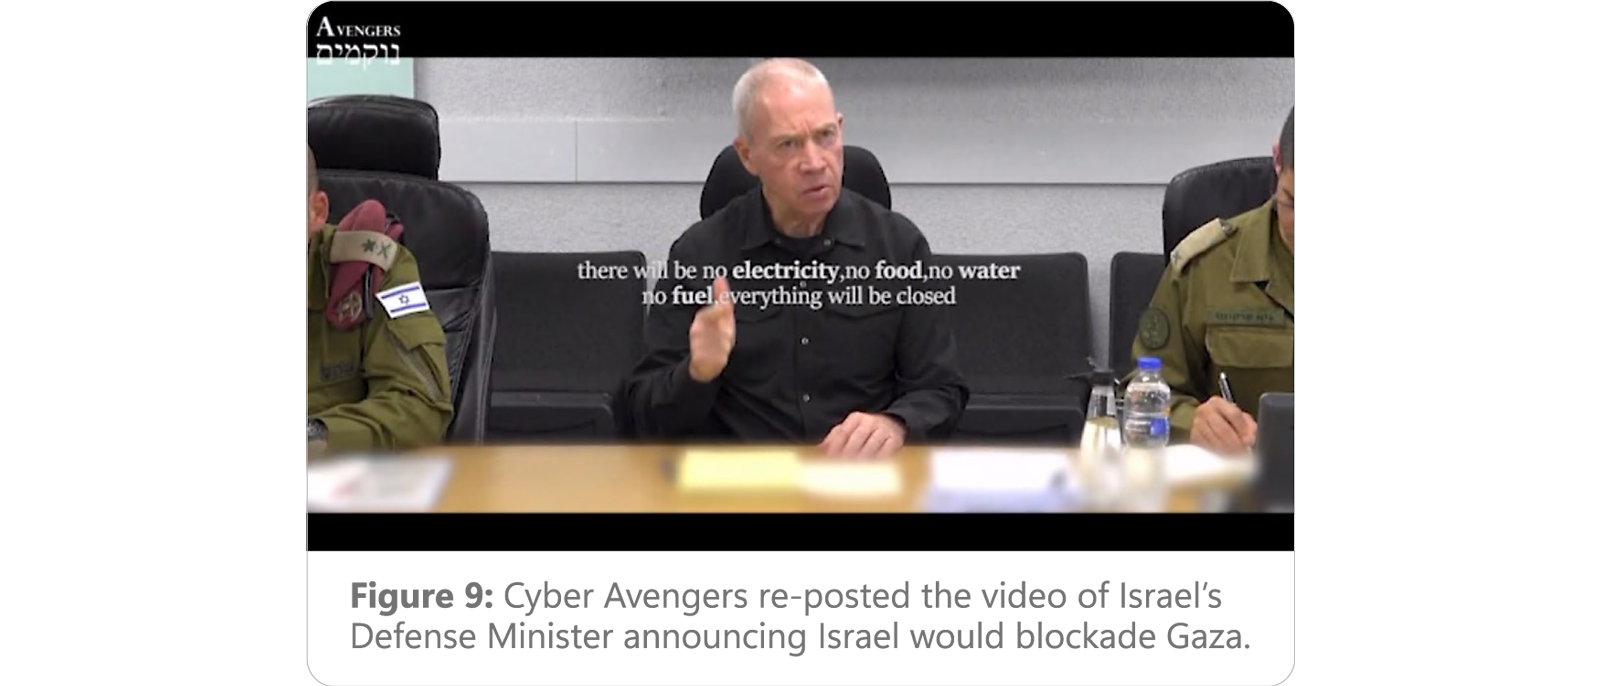 AVENGERS: no hay electricidad, alimentos, agua, combustible. Cyber Avengers vuelve a publicar un vídeo sobre el bloqueo de Israel